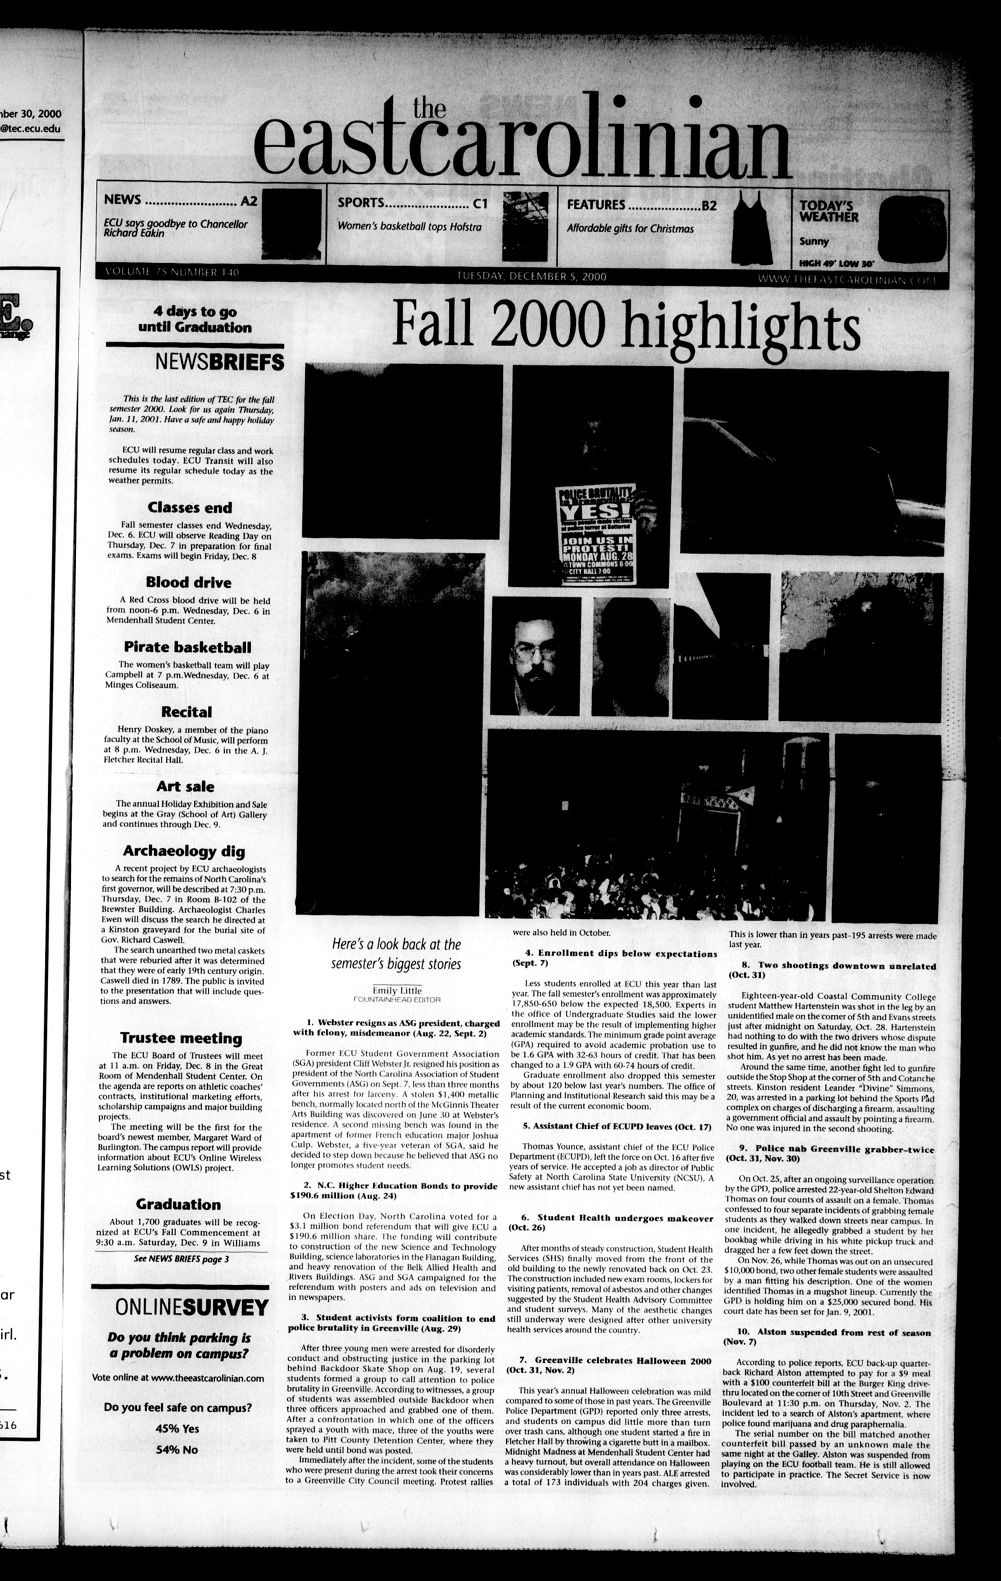 The East Carolinian, December 5, 2000 image